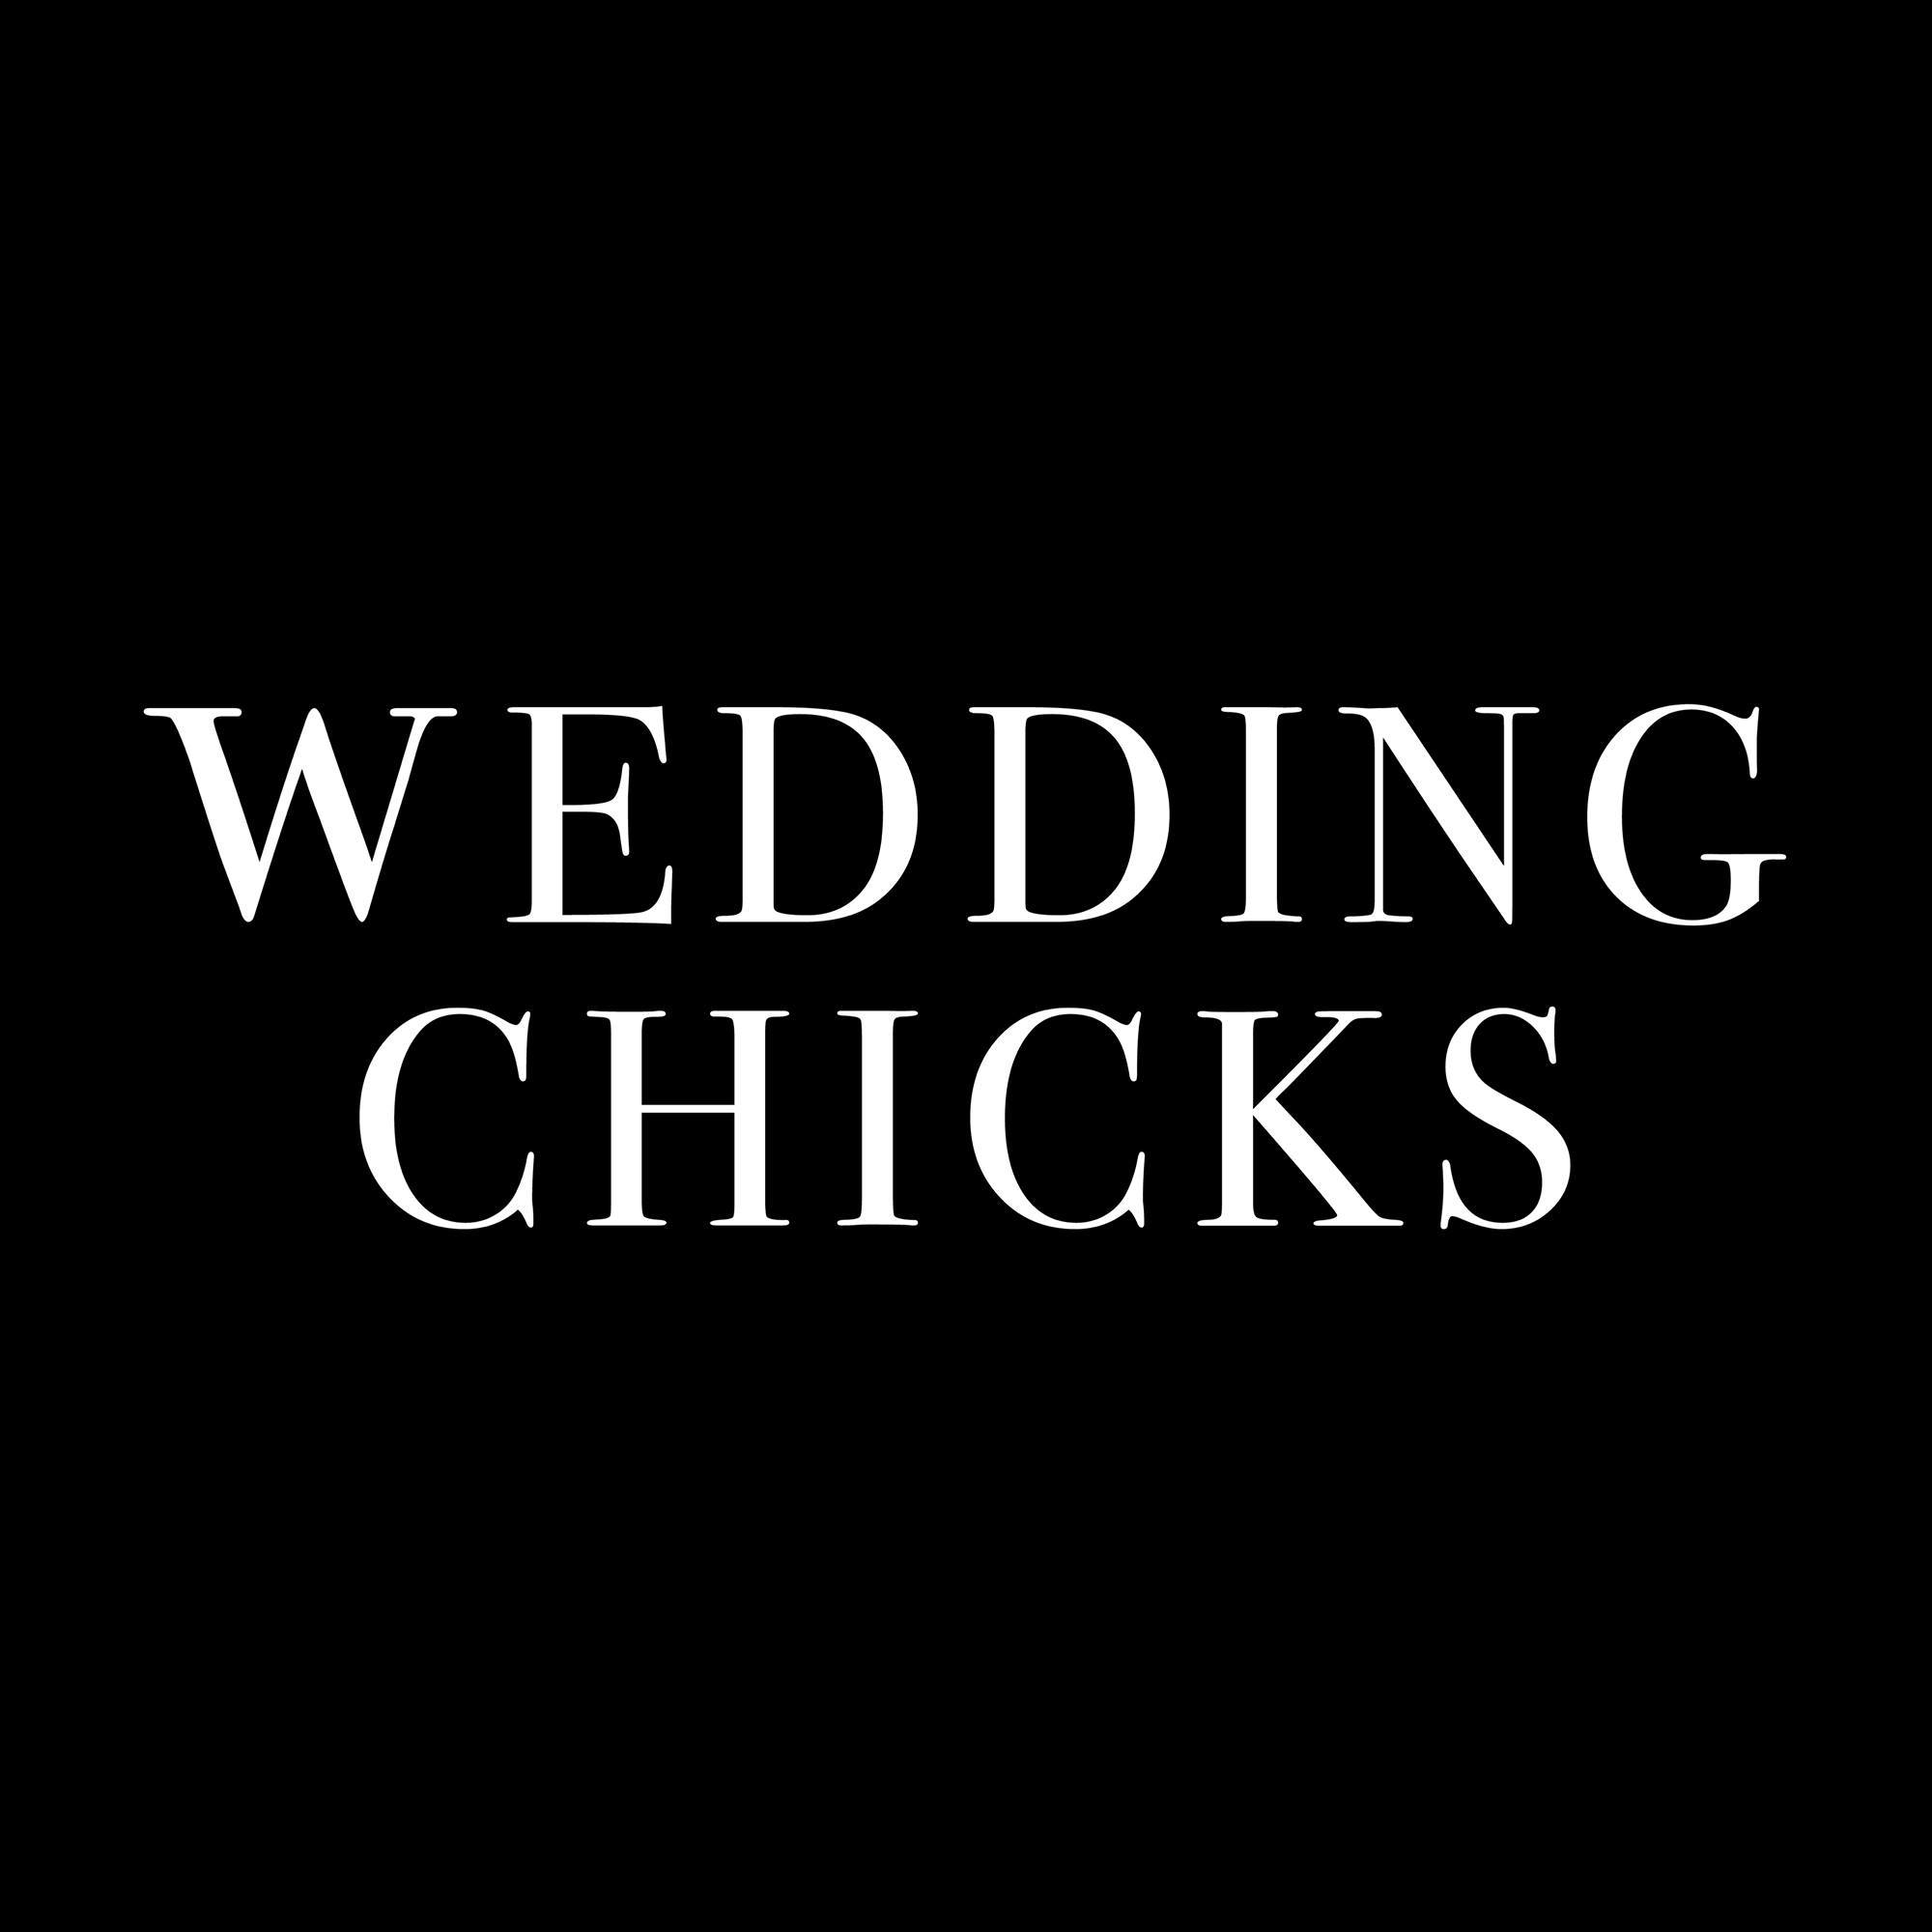 WEDDING CHICKS